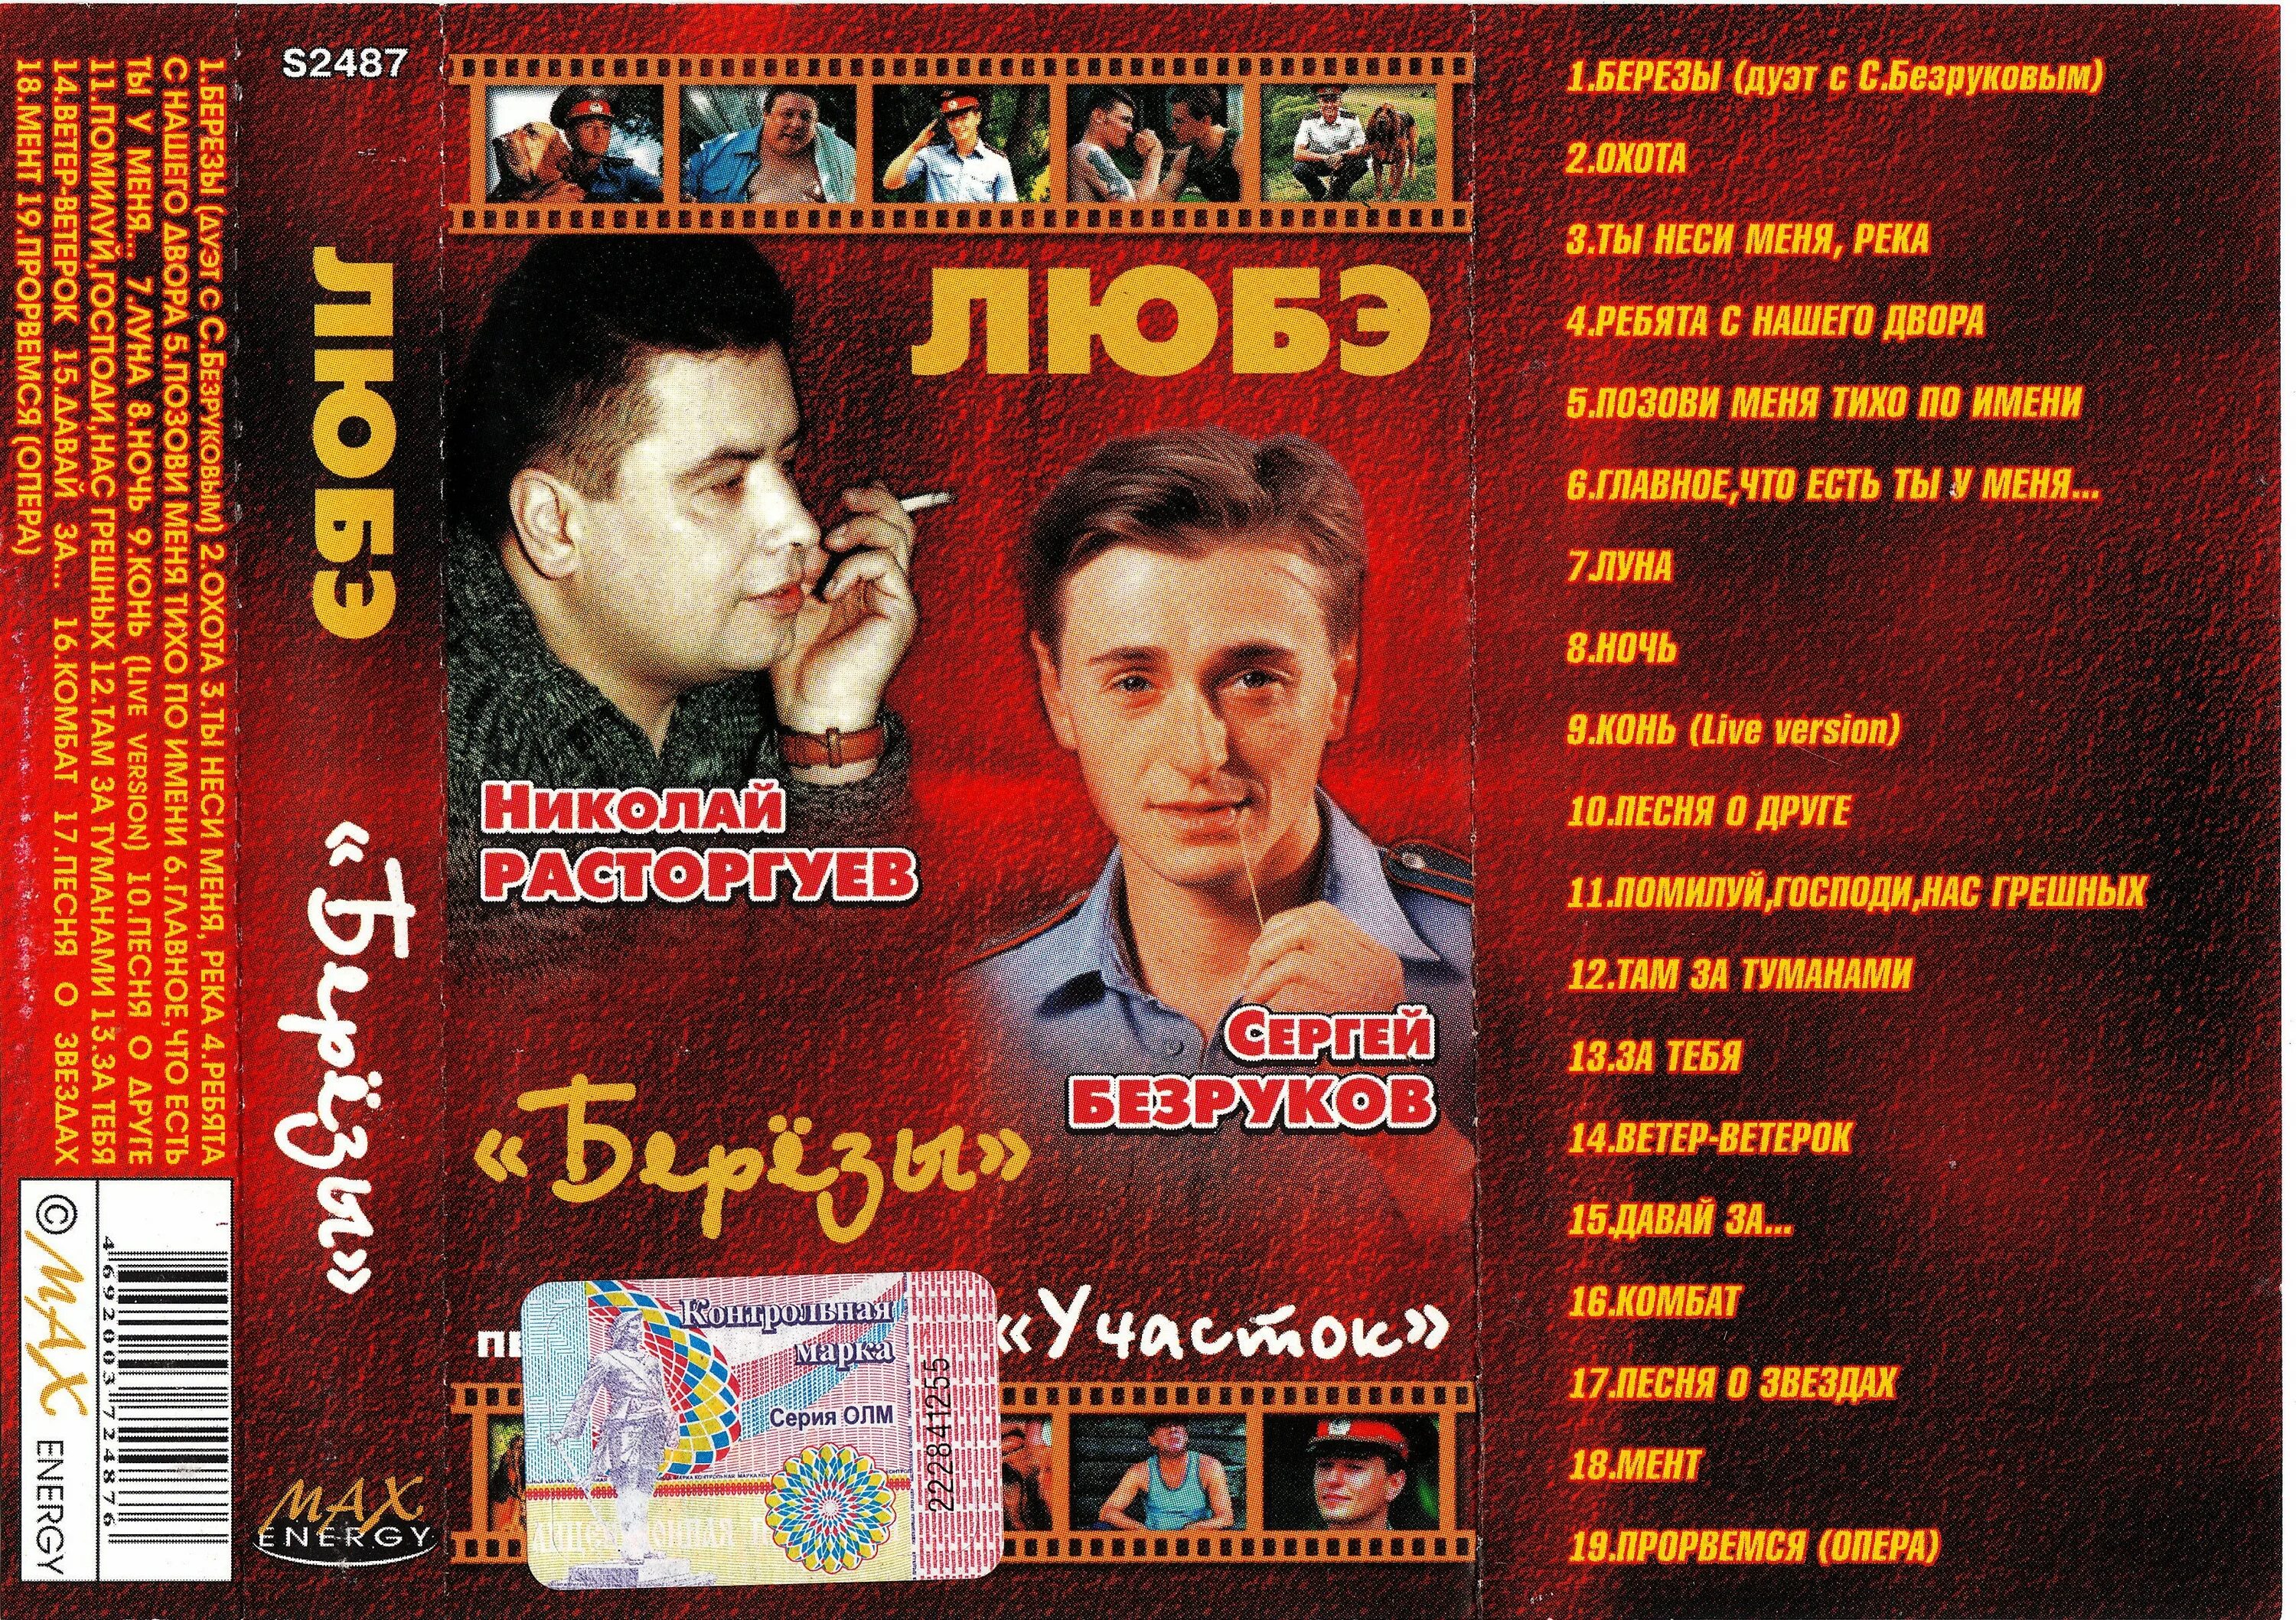 Любэ кассета 2003. Аудиокассета группы Любэ. Берёзы Безруков Любэ кассета.